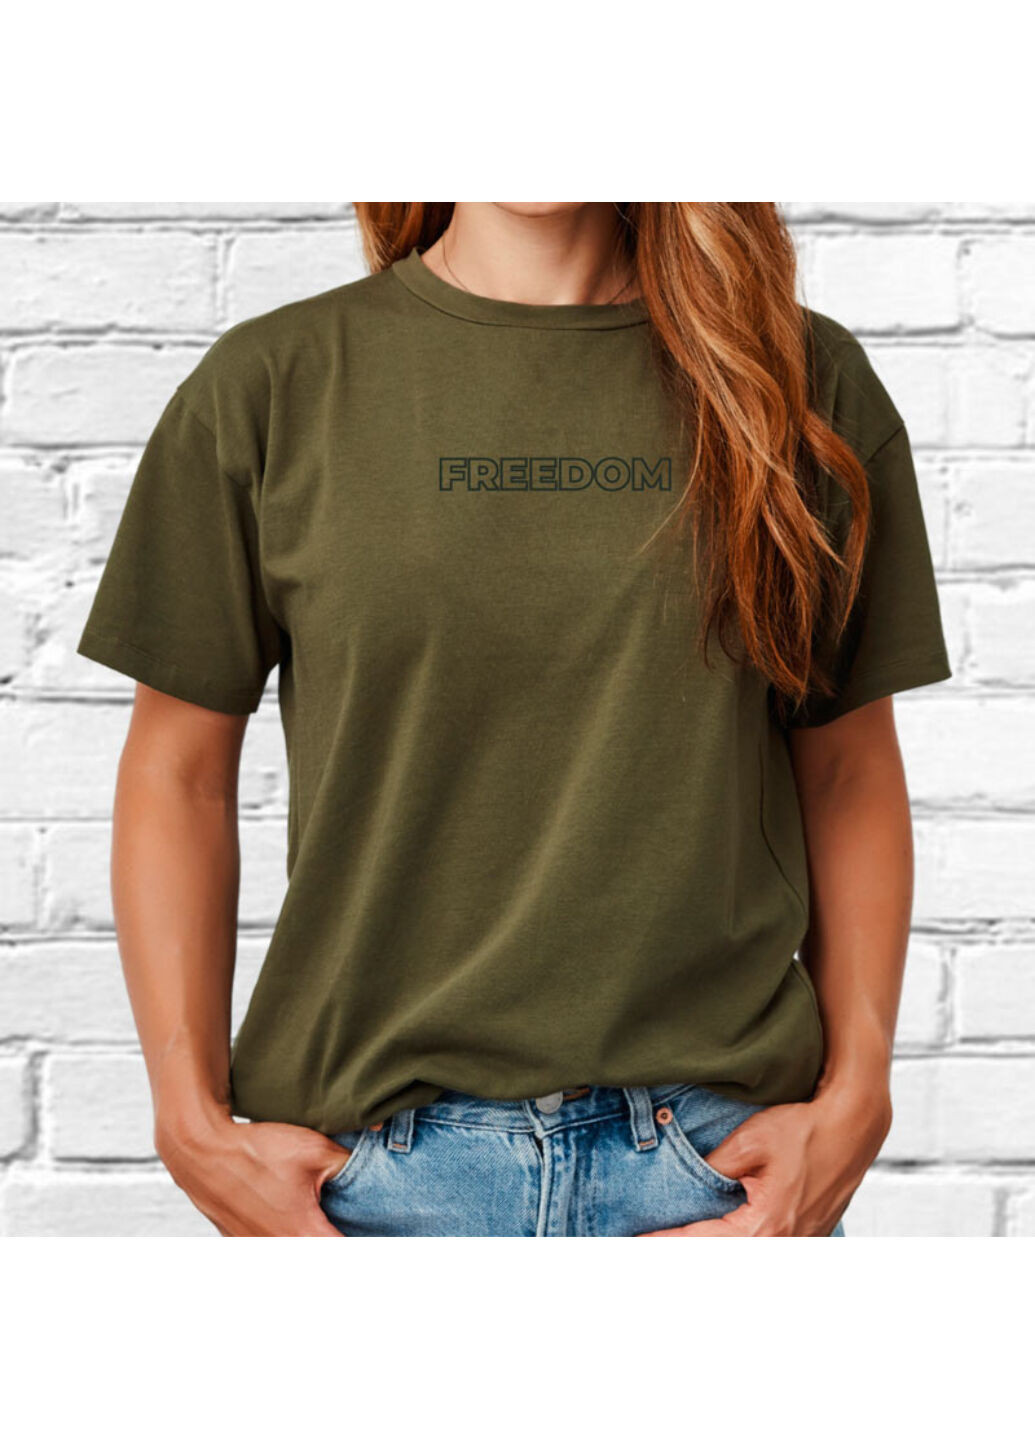 Хаки (оливковая) футболка з вишивкою freedom женская хаки xl No Brand